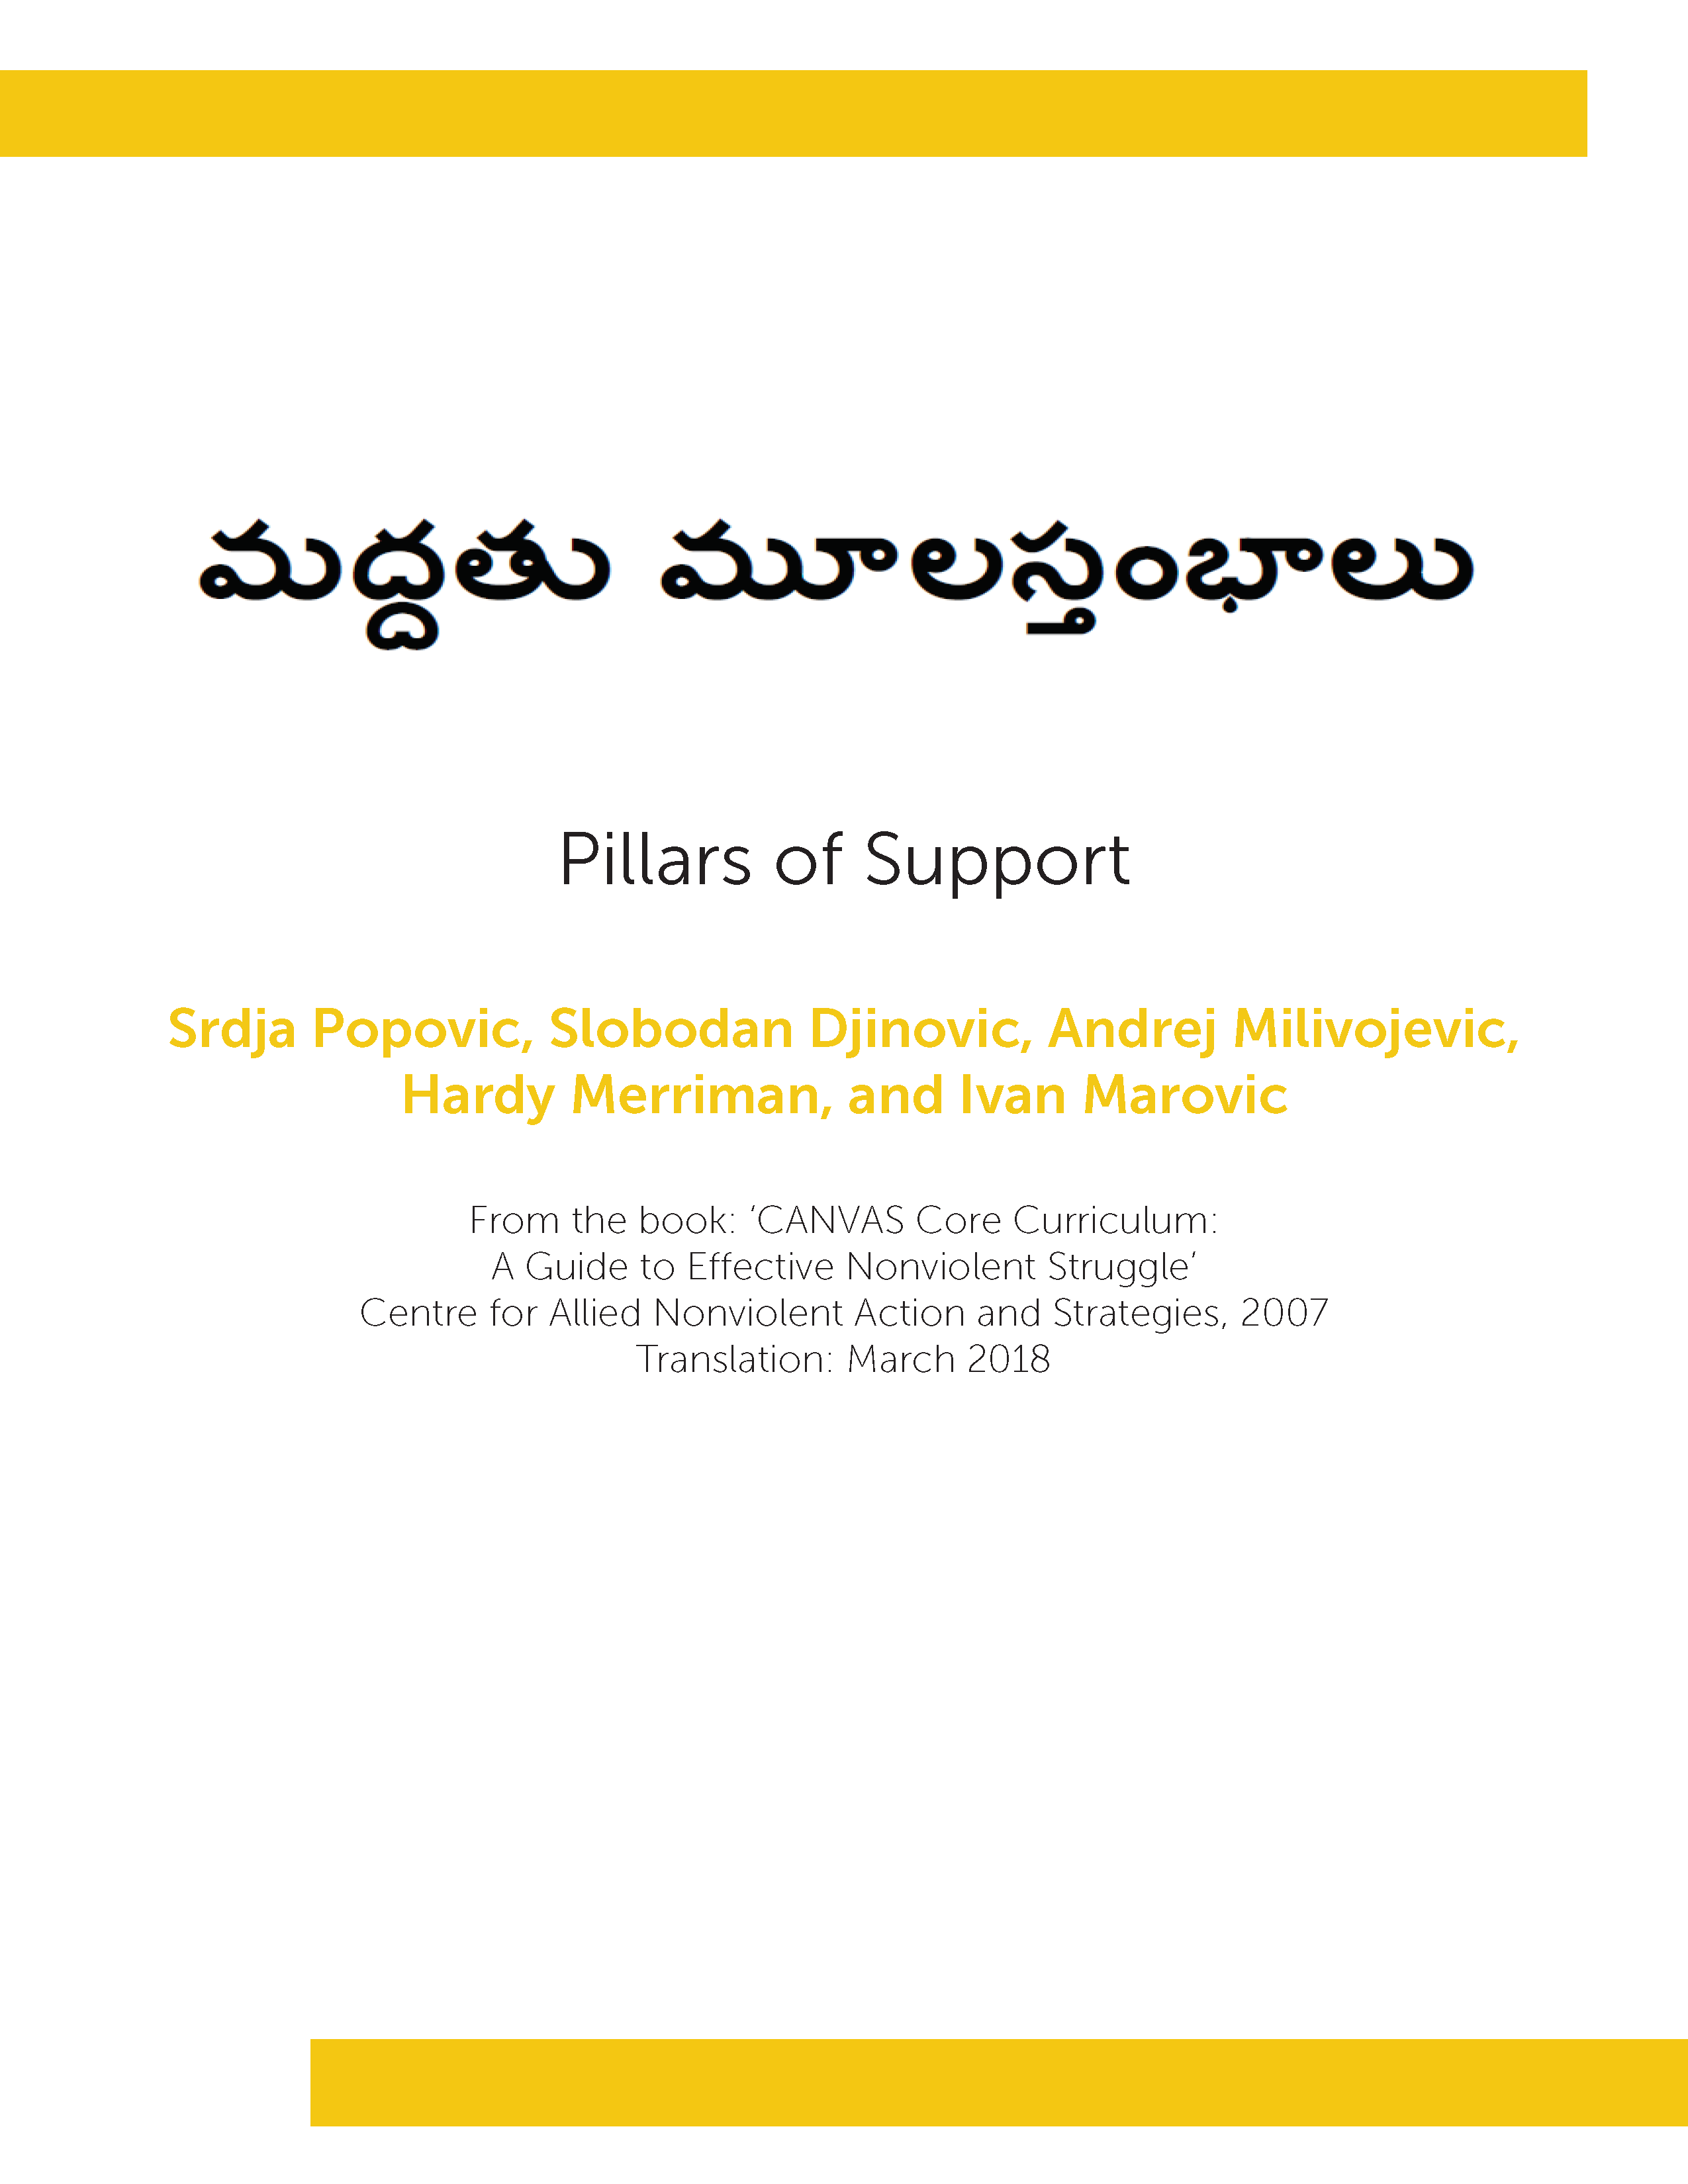 Pillars of Support (Telugu)